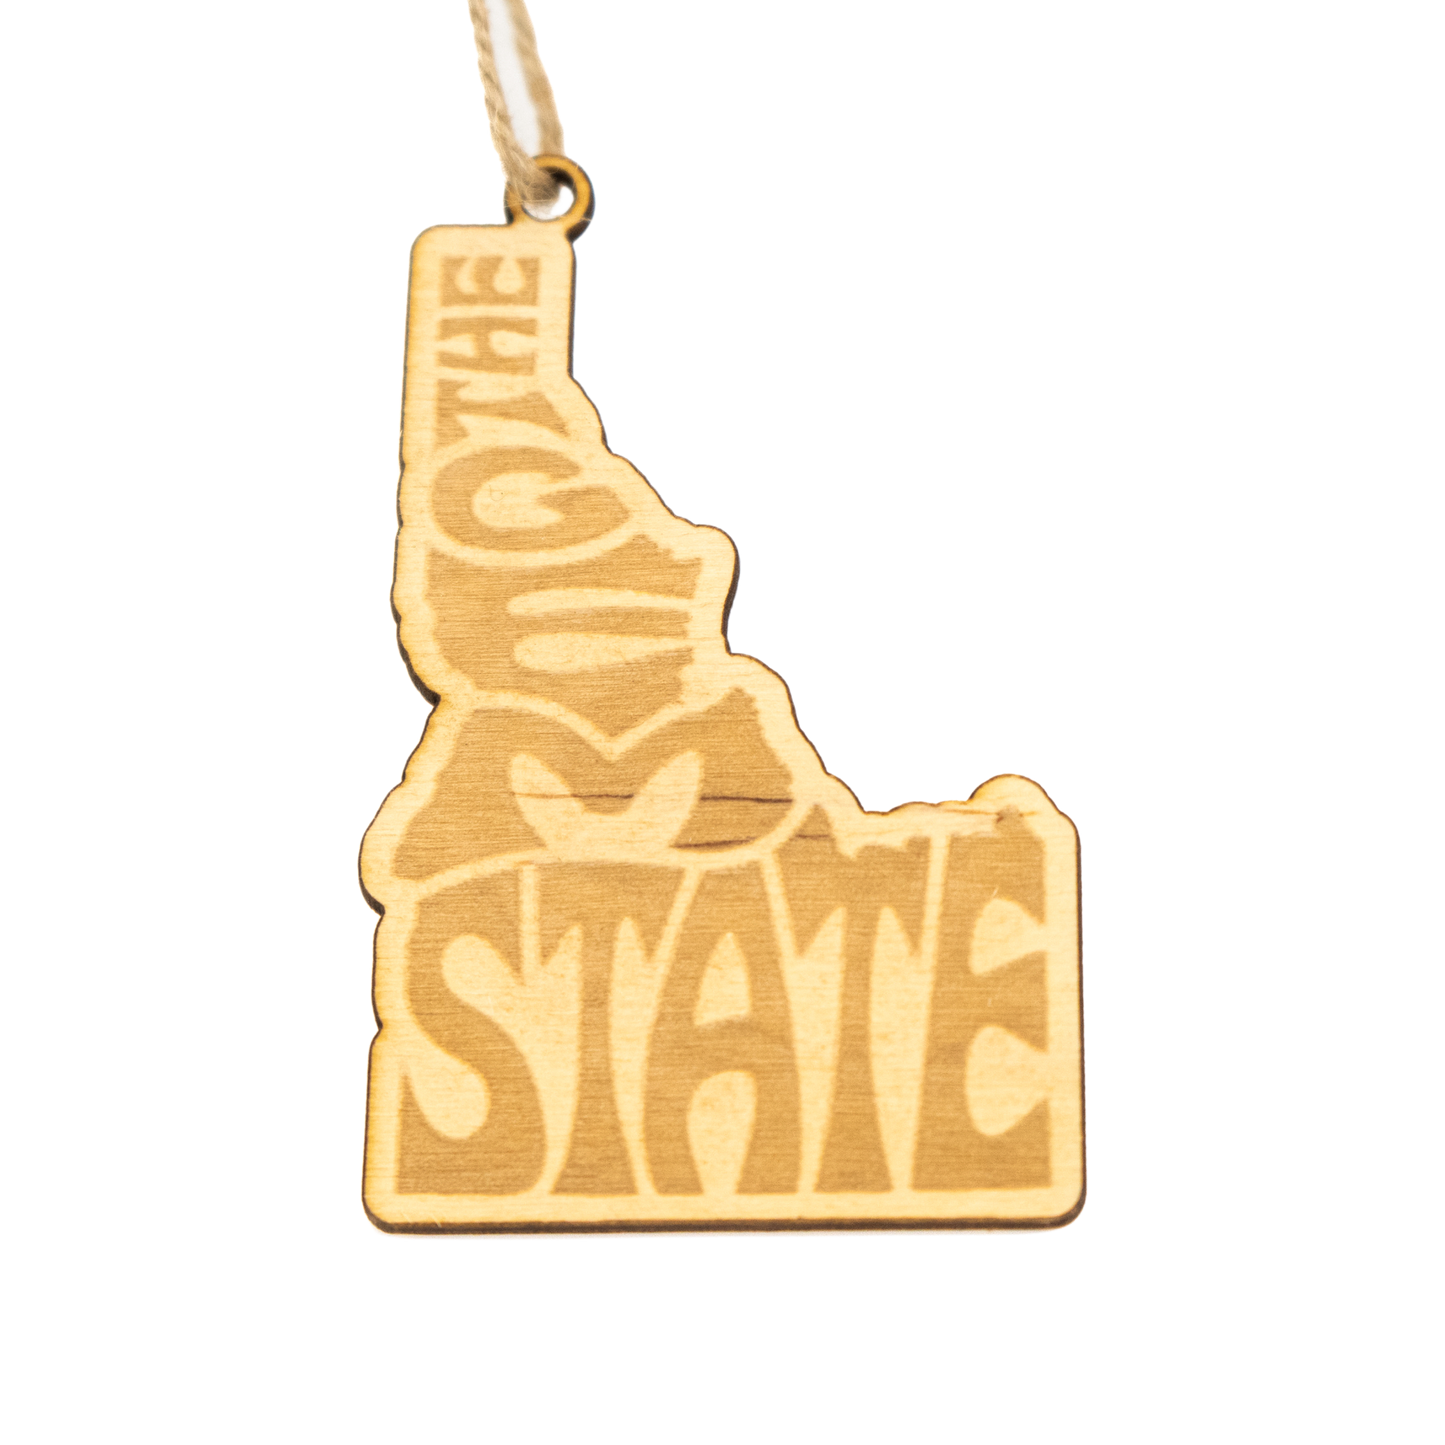 Idaho State Nickname Ornament